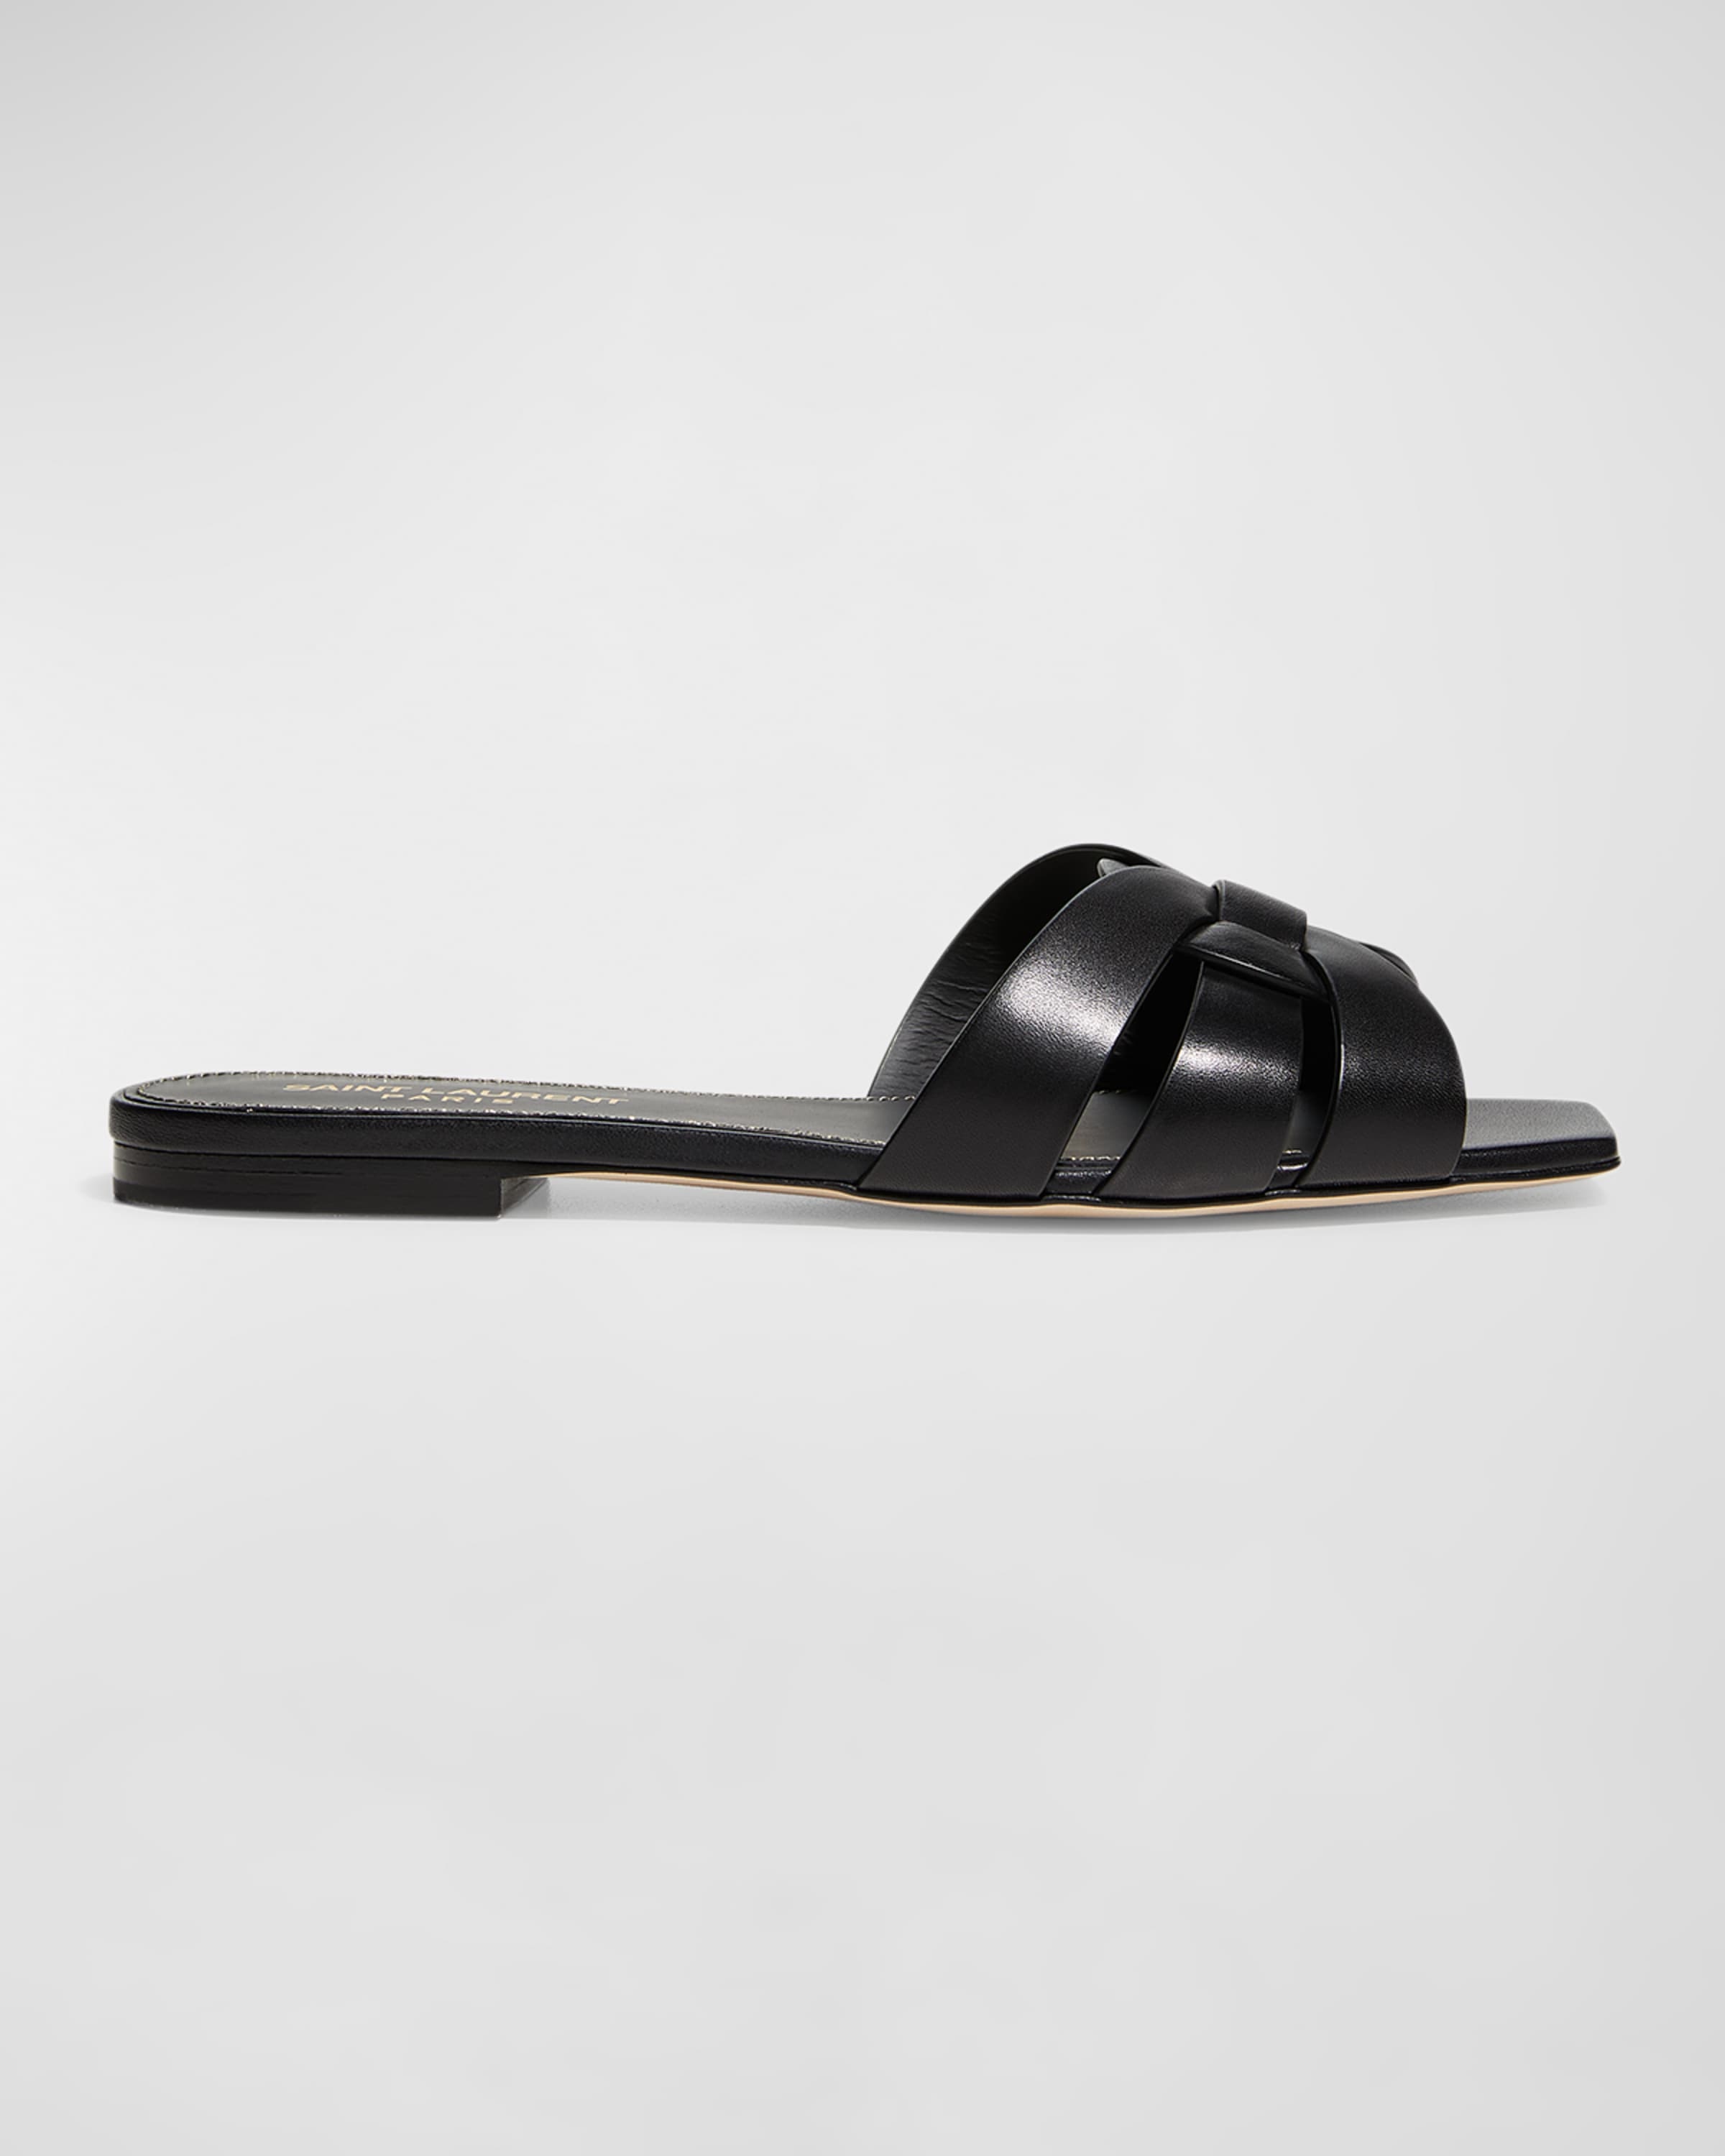 Woven Leather Sandal Slide - 1